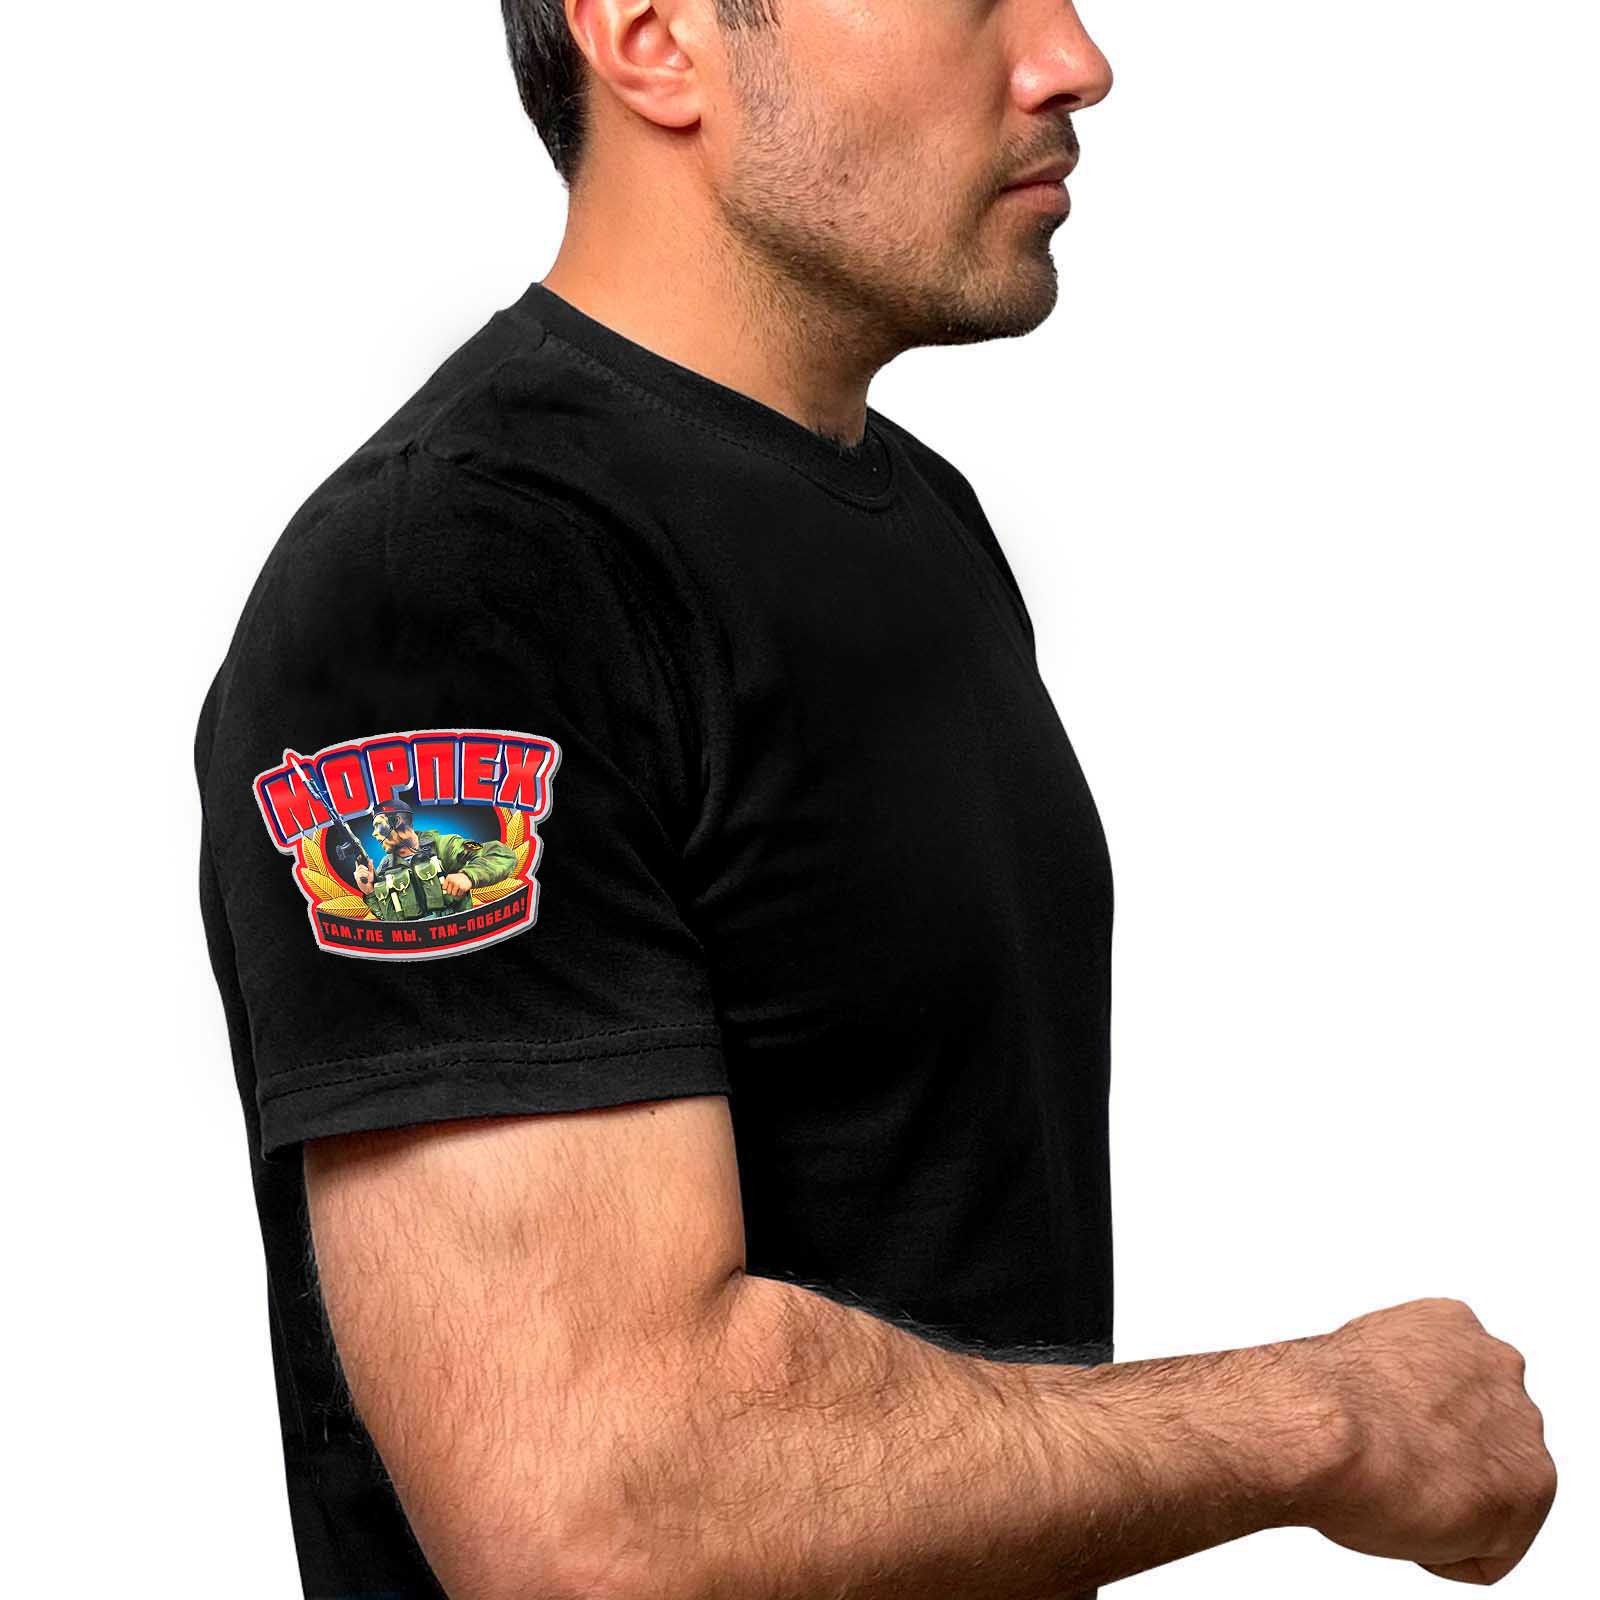 Чёрная футболка с термотрансфером "Морпех" на рукаве